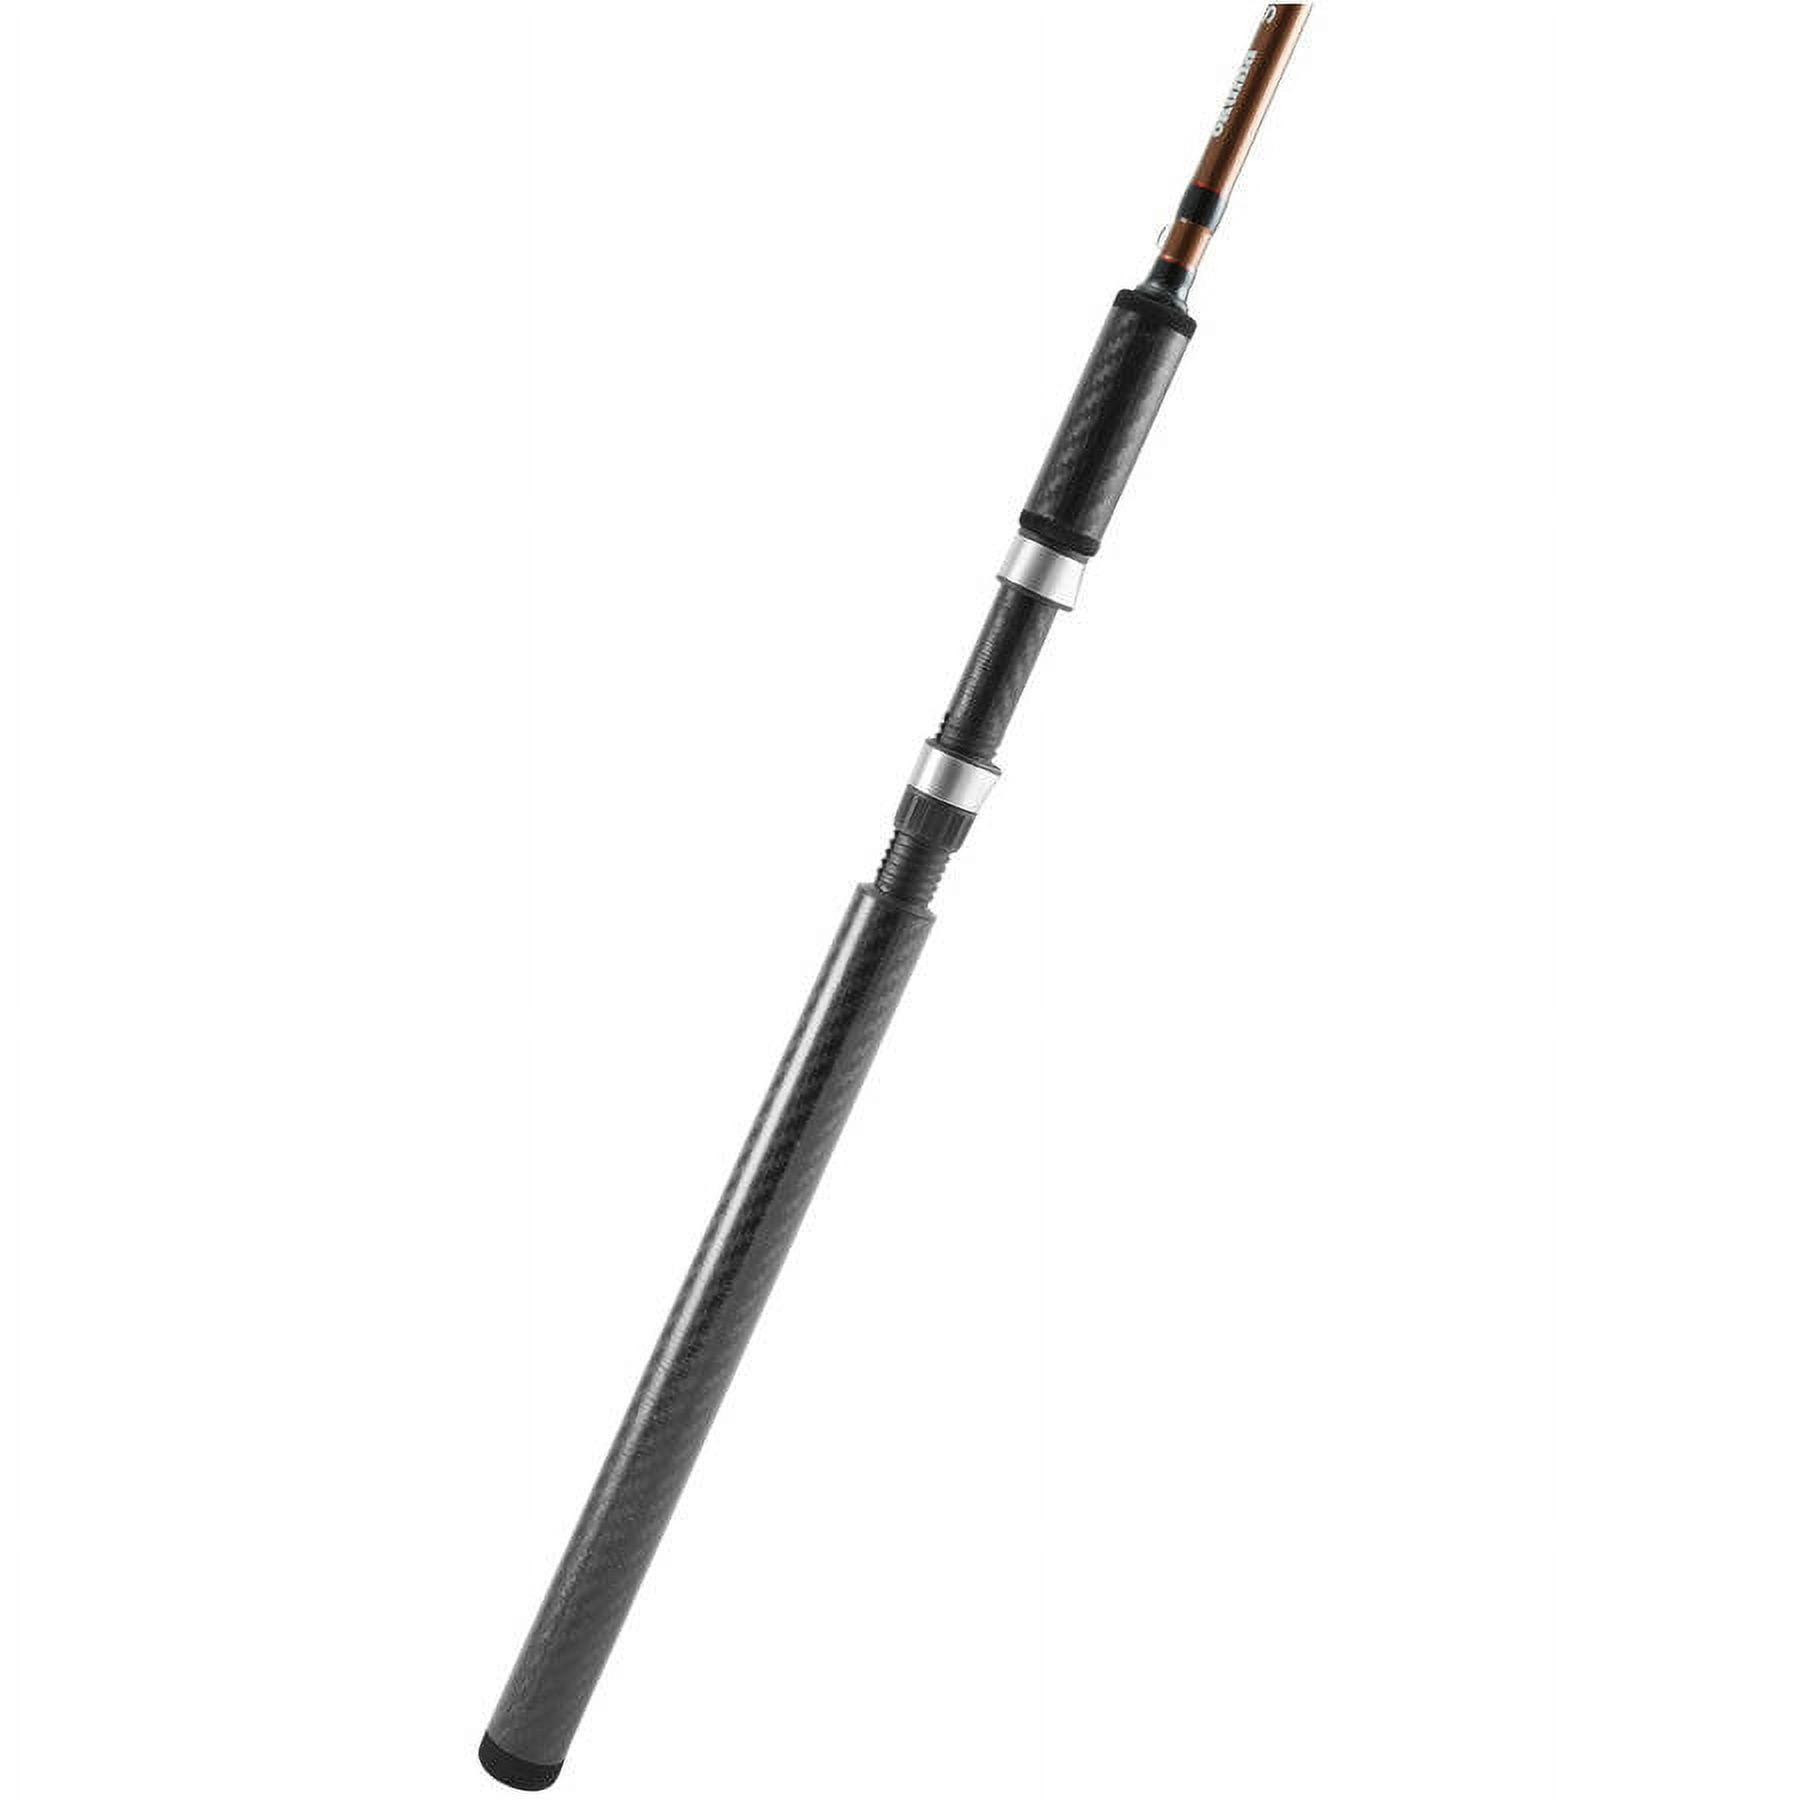 Okuma SST Spinning Rod with Carbon Fiber Grips